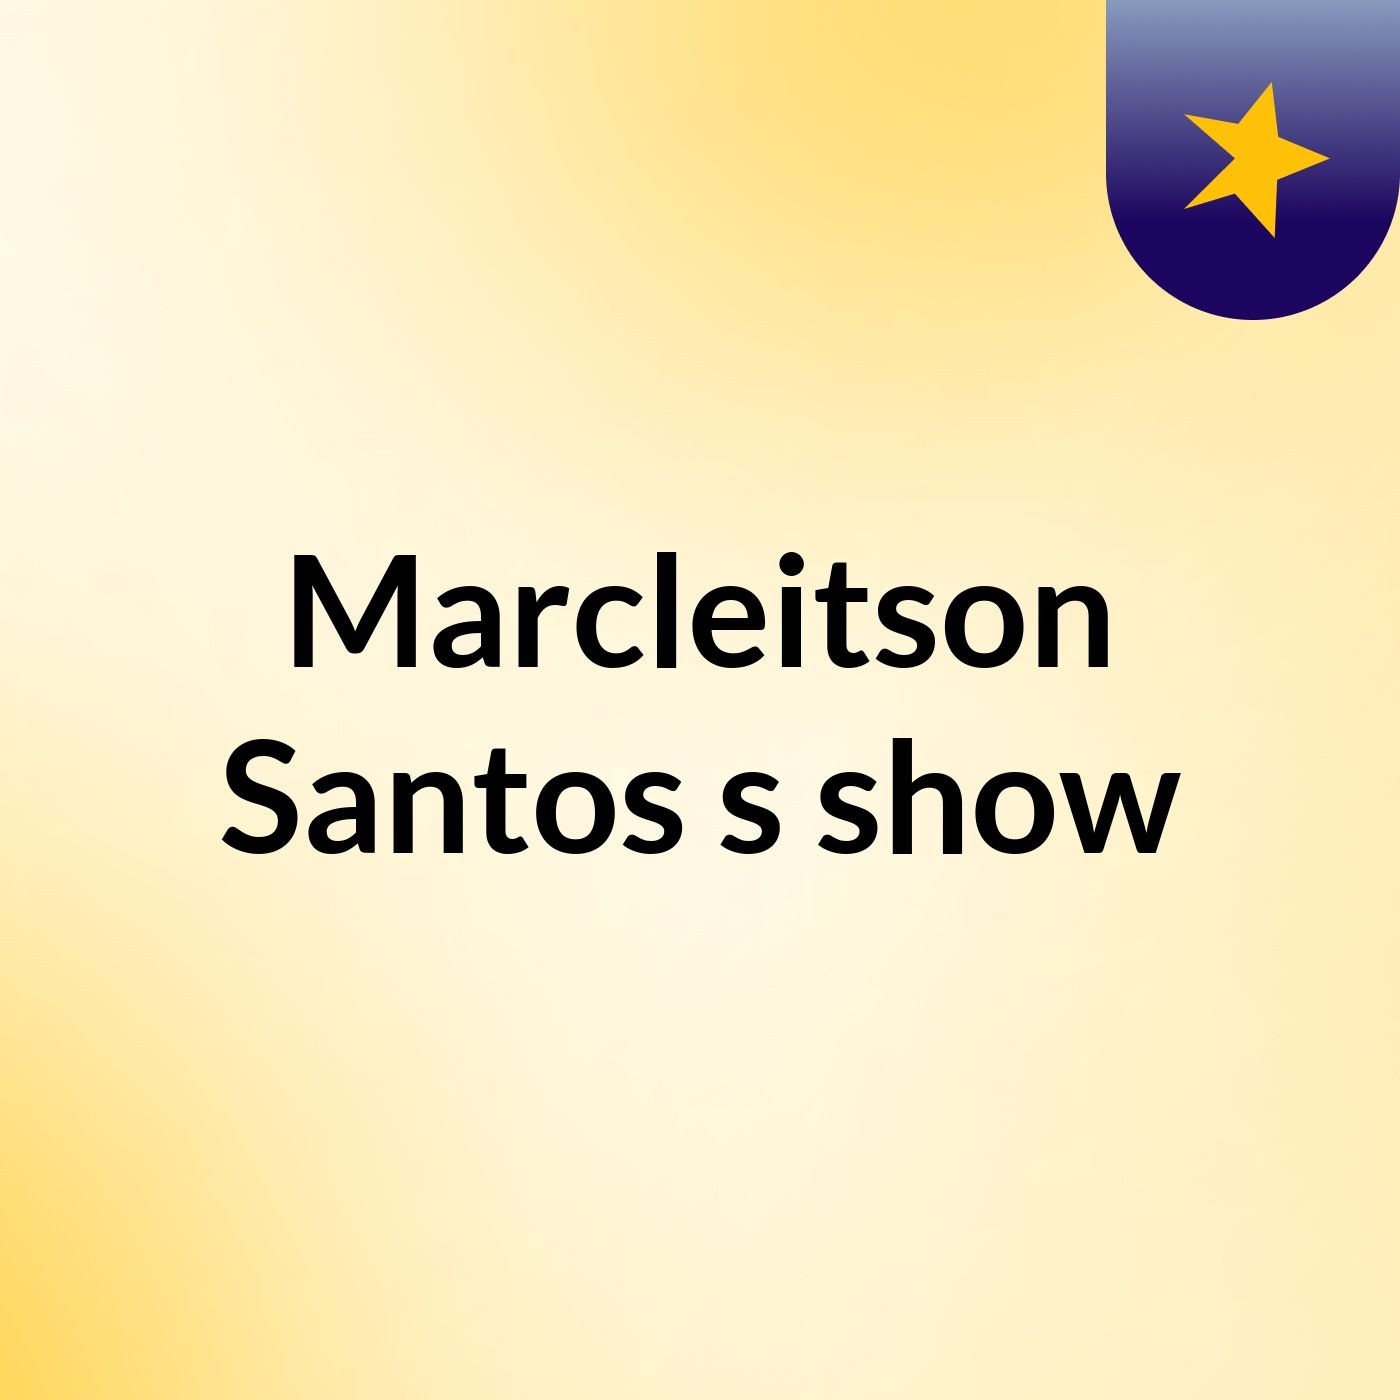 Marcleitson Santos's show